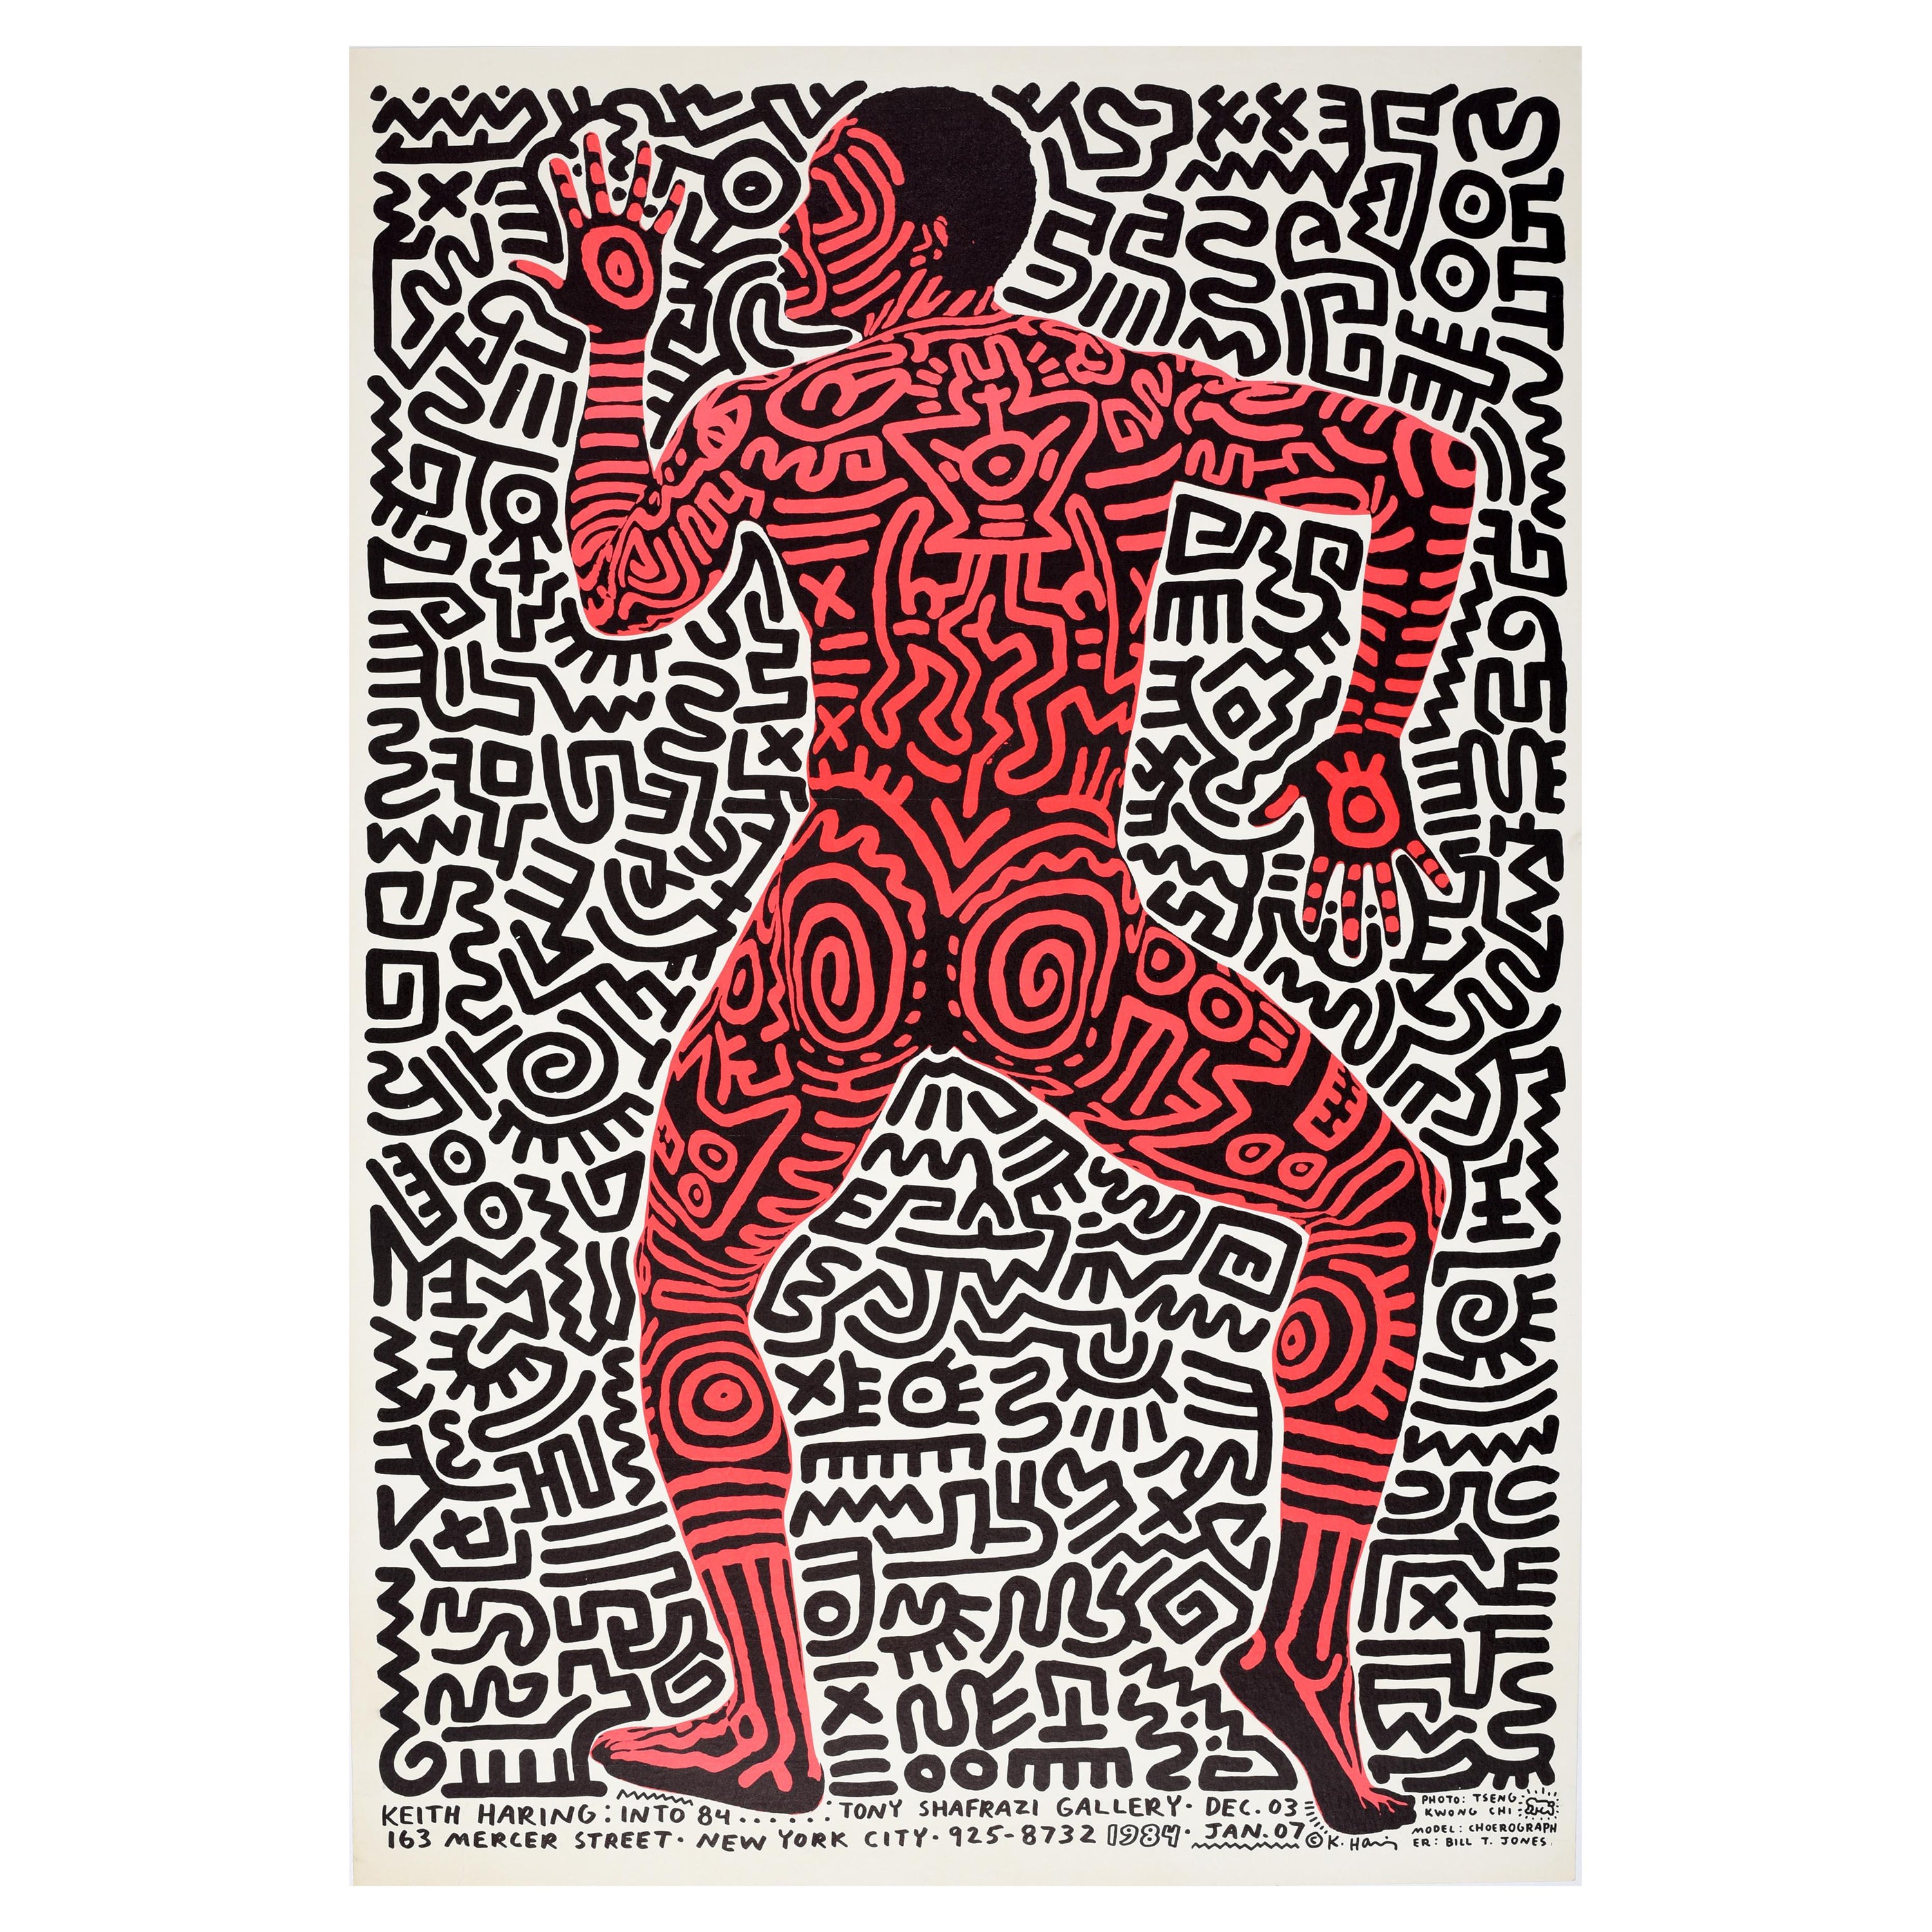 Original Vintage Advertising Poster Keith Haring Exhibition Tony Shafrazi Design For Sale